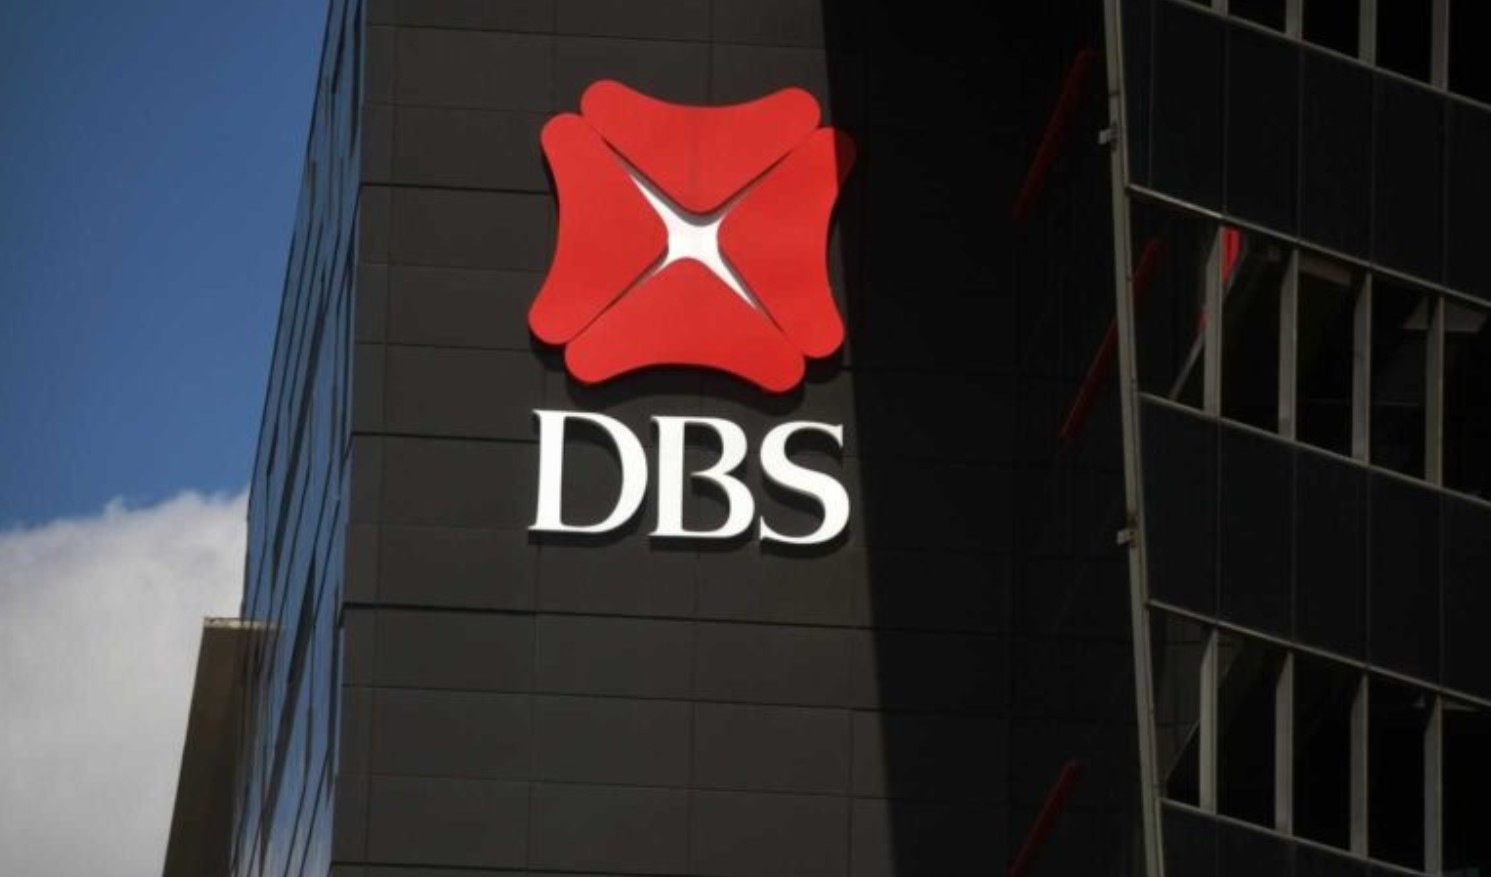 dbs bank ceosu banka kurumsal kripto tekliflerine odaklanacak 2